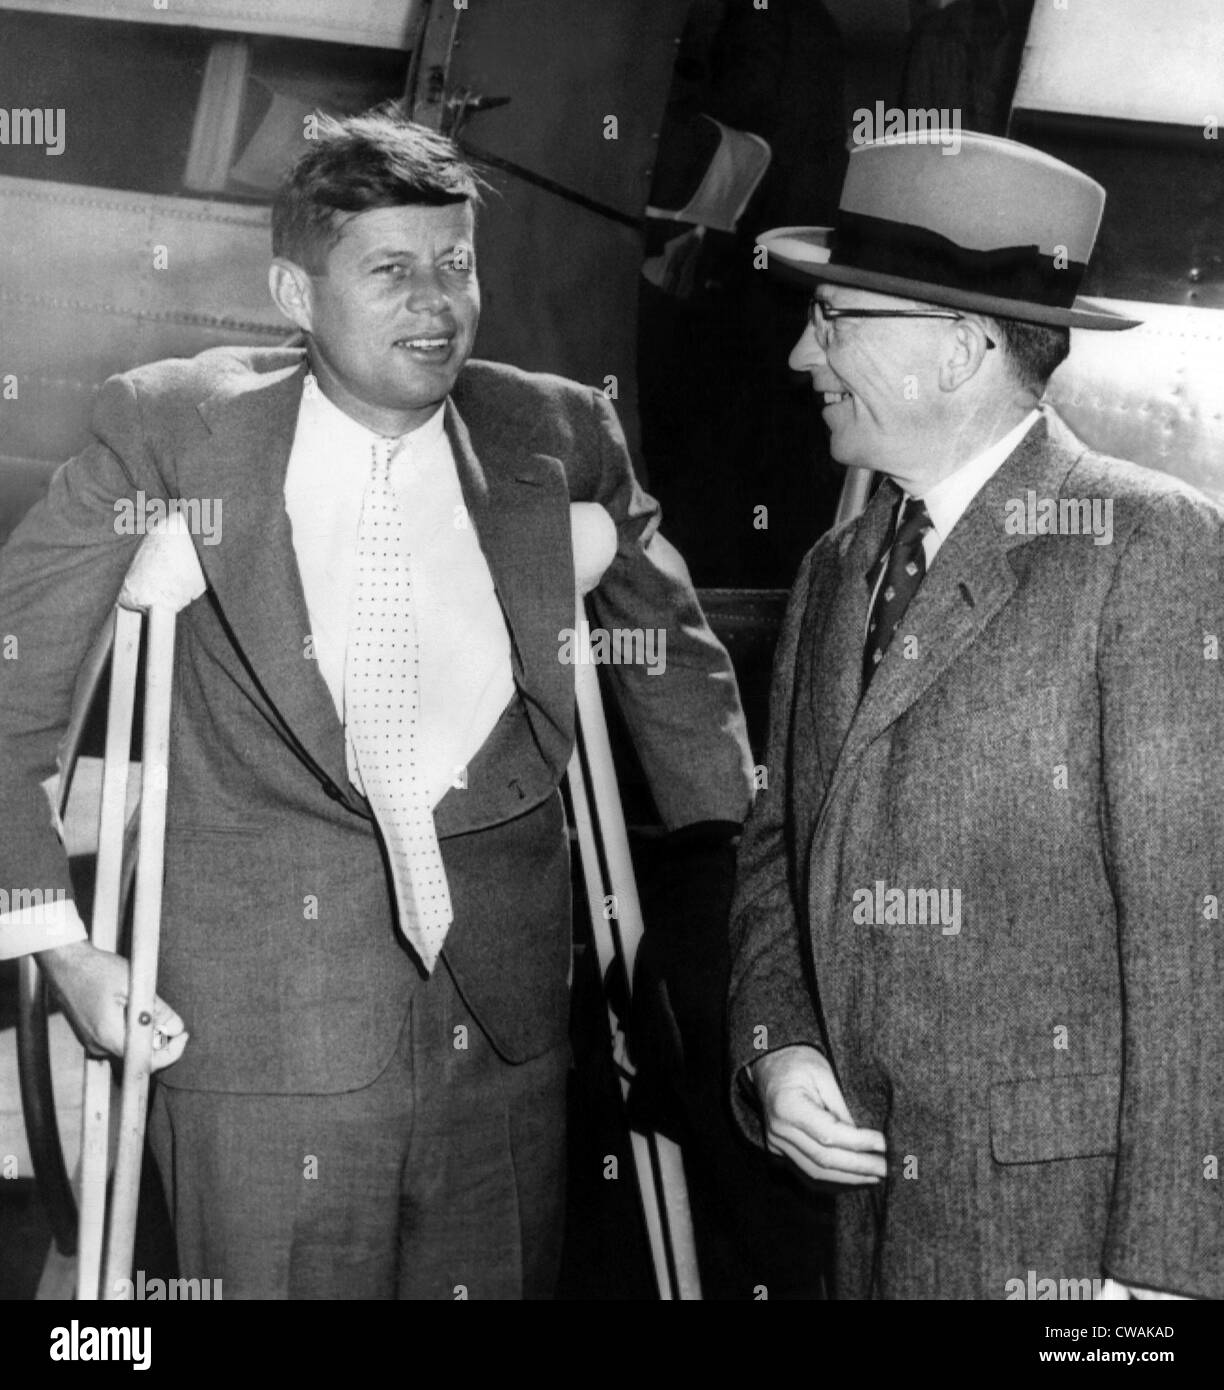 Senator John F. Kennedy, auf Krücken aus einer Kriegszeit Rückenverletzung, Leutnant-Gouverneur von Massachusetts Robert F. Murphy an Logan Stockfoto